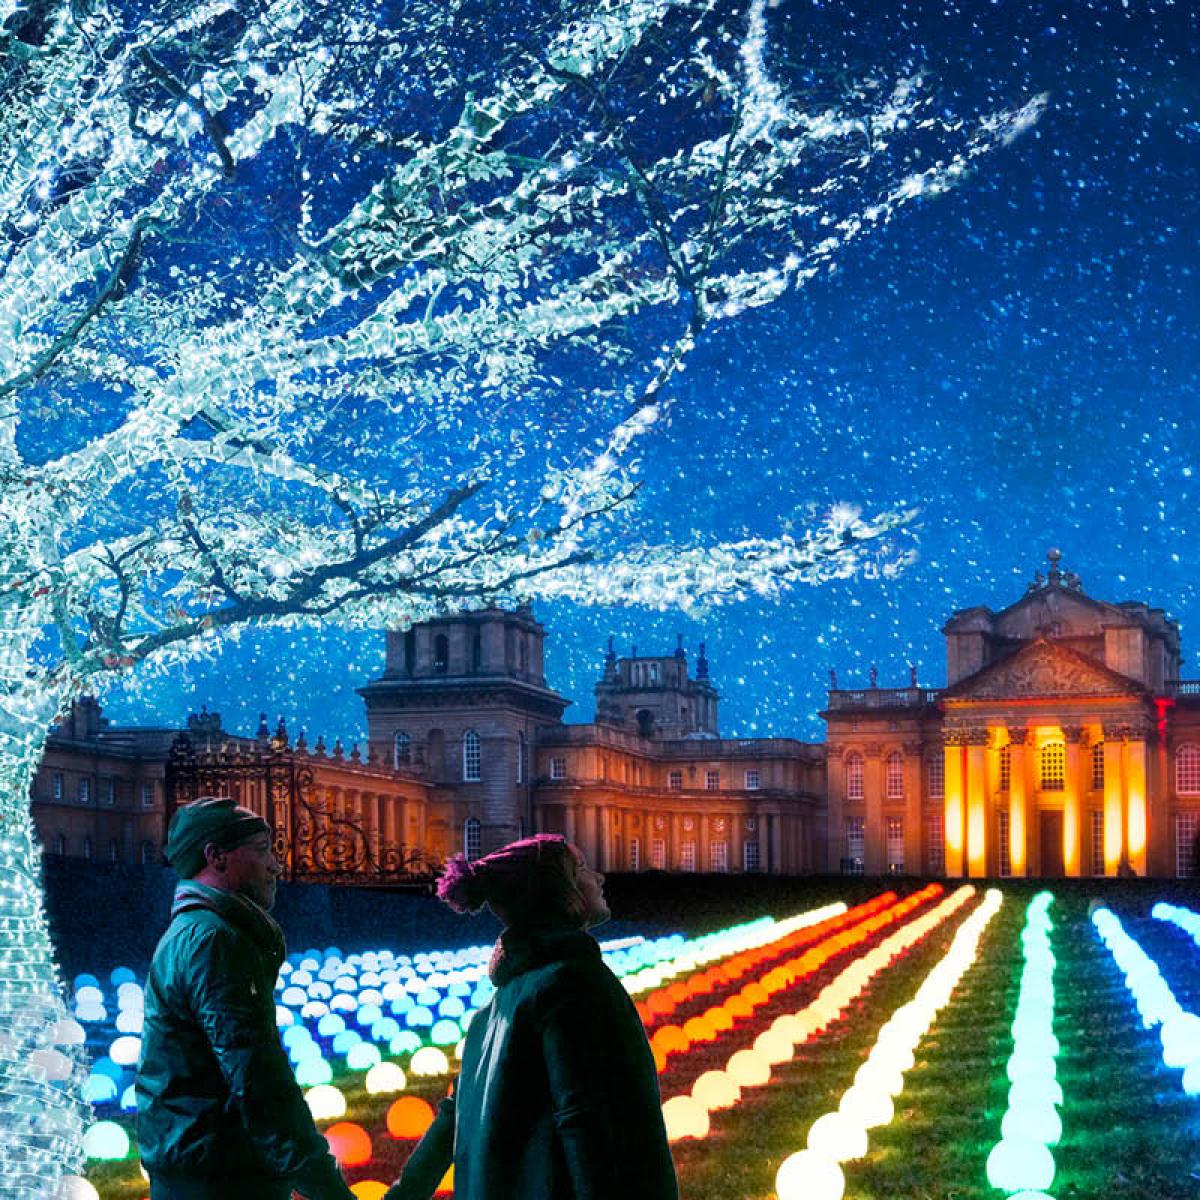 Blenheim Palace Christmas Lights 2020 - Red Kite Days